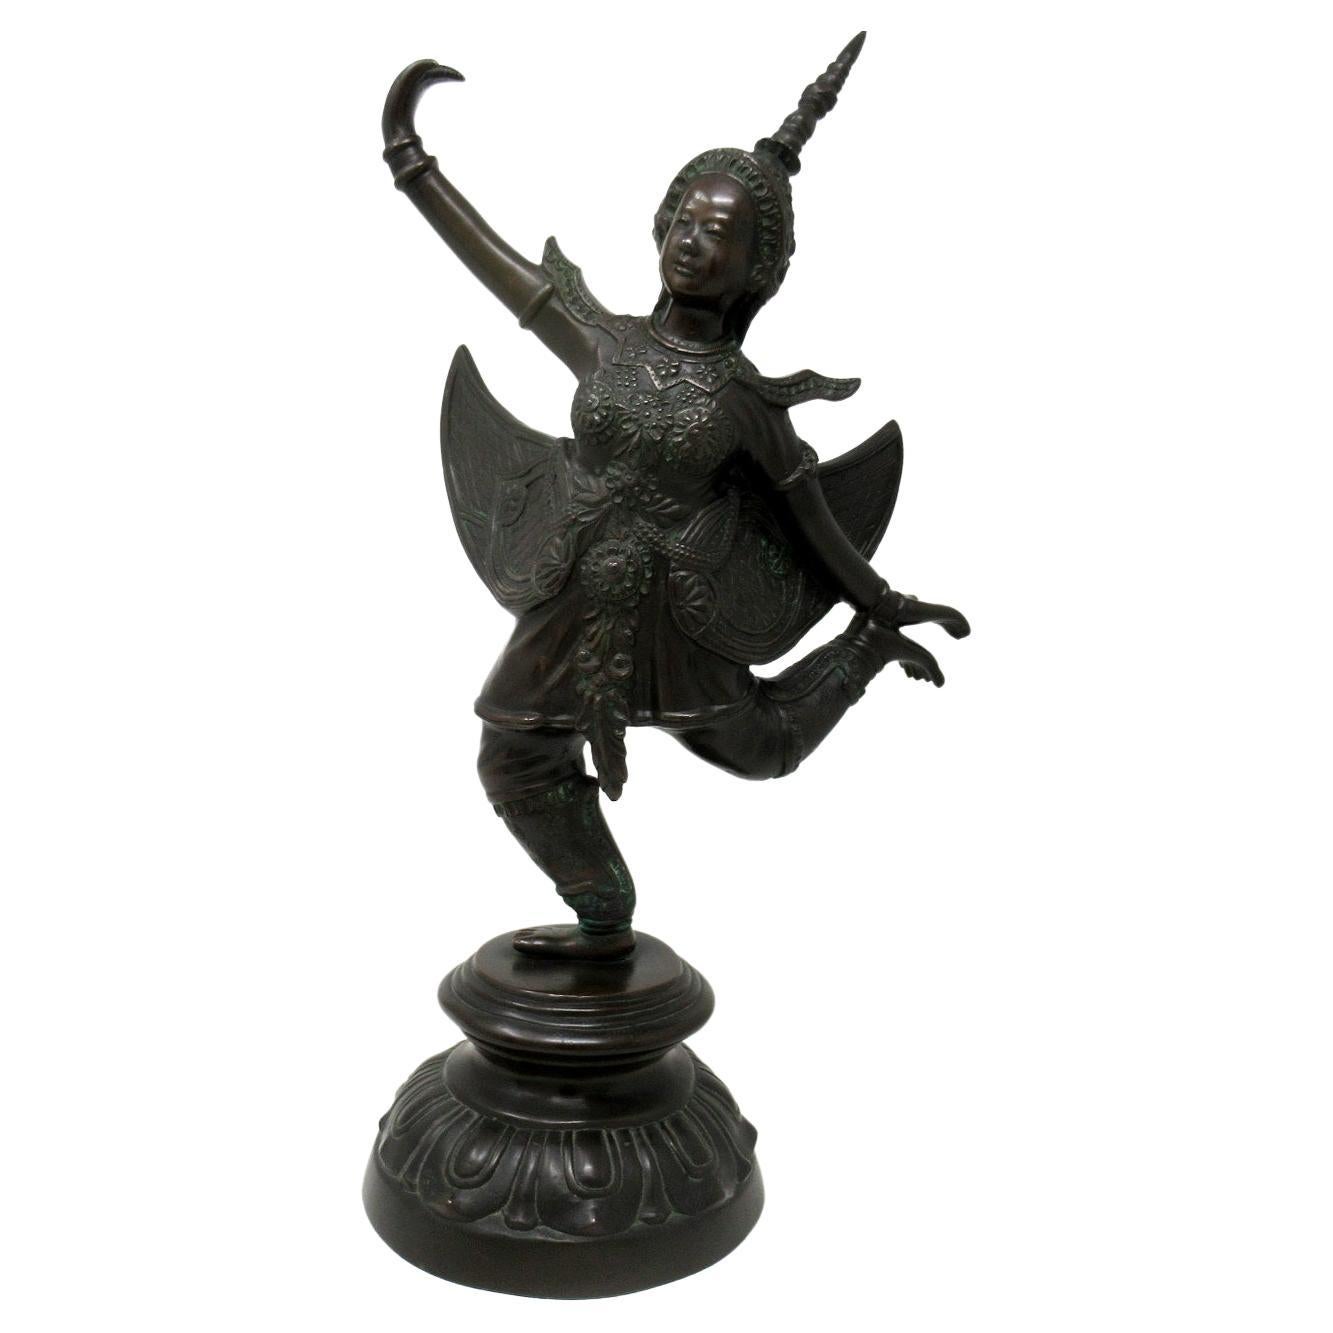 Antique Bronze Thai Lady Dancer Sculpture Figure Buddha Thailand